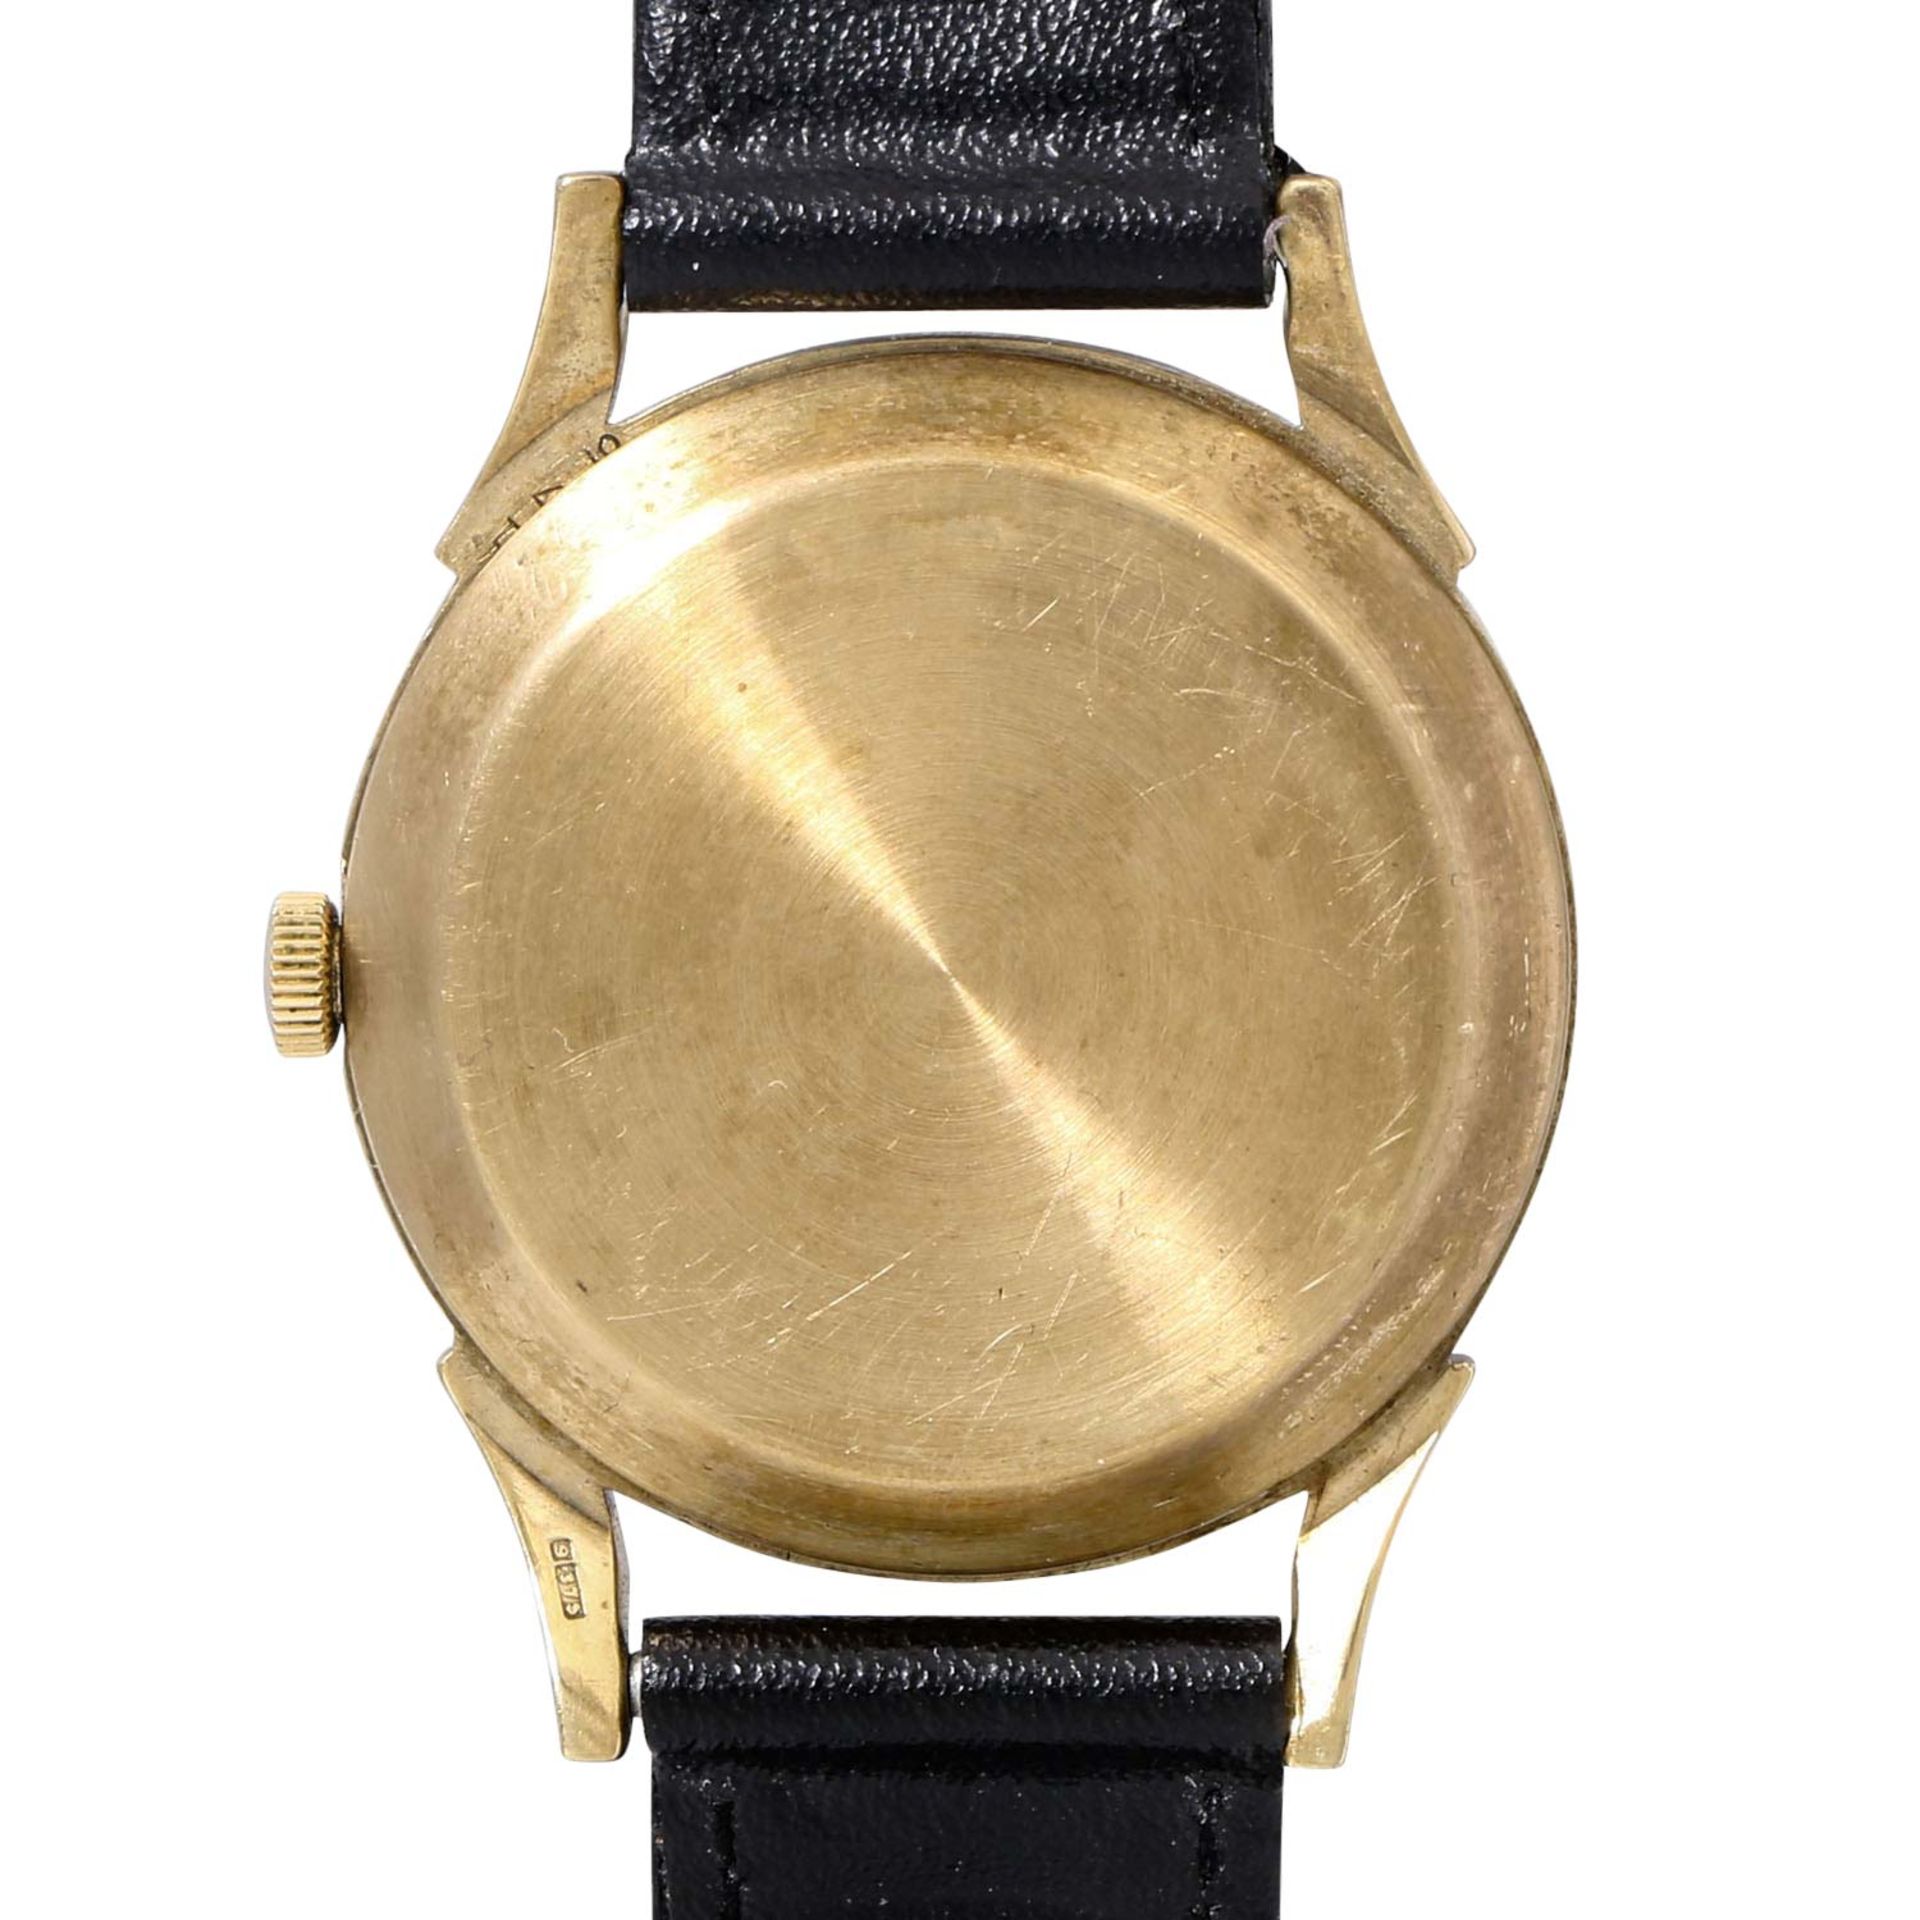 ROLEX Vintage Precision Armbanduhr. Ca. 1940er Jahre. - Bild 2 aus 7